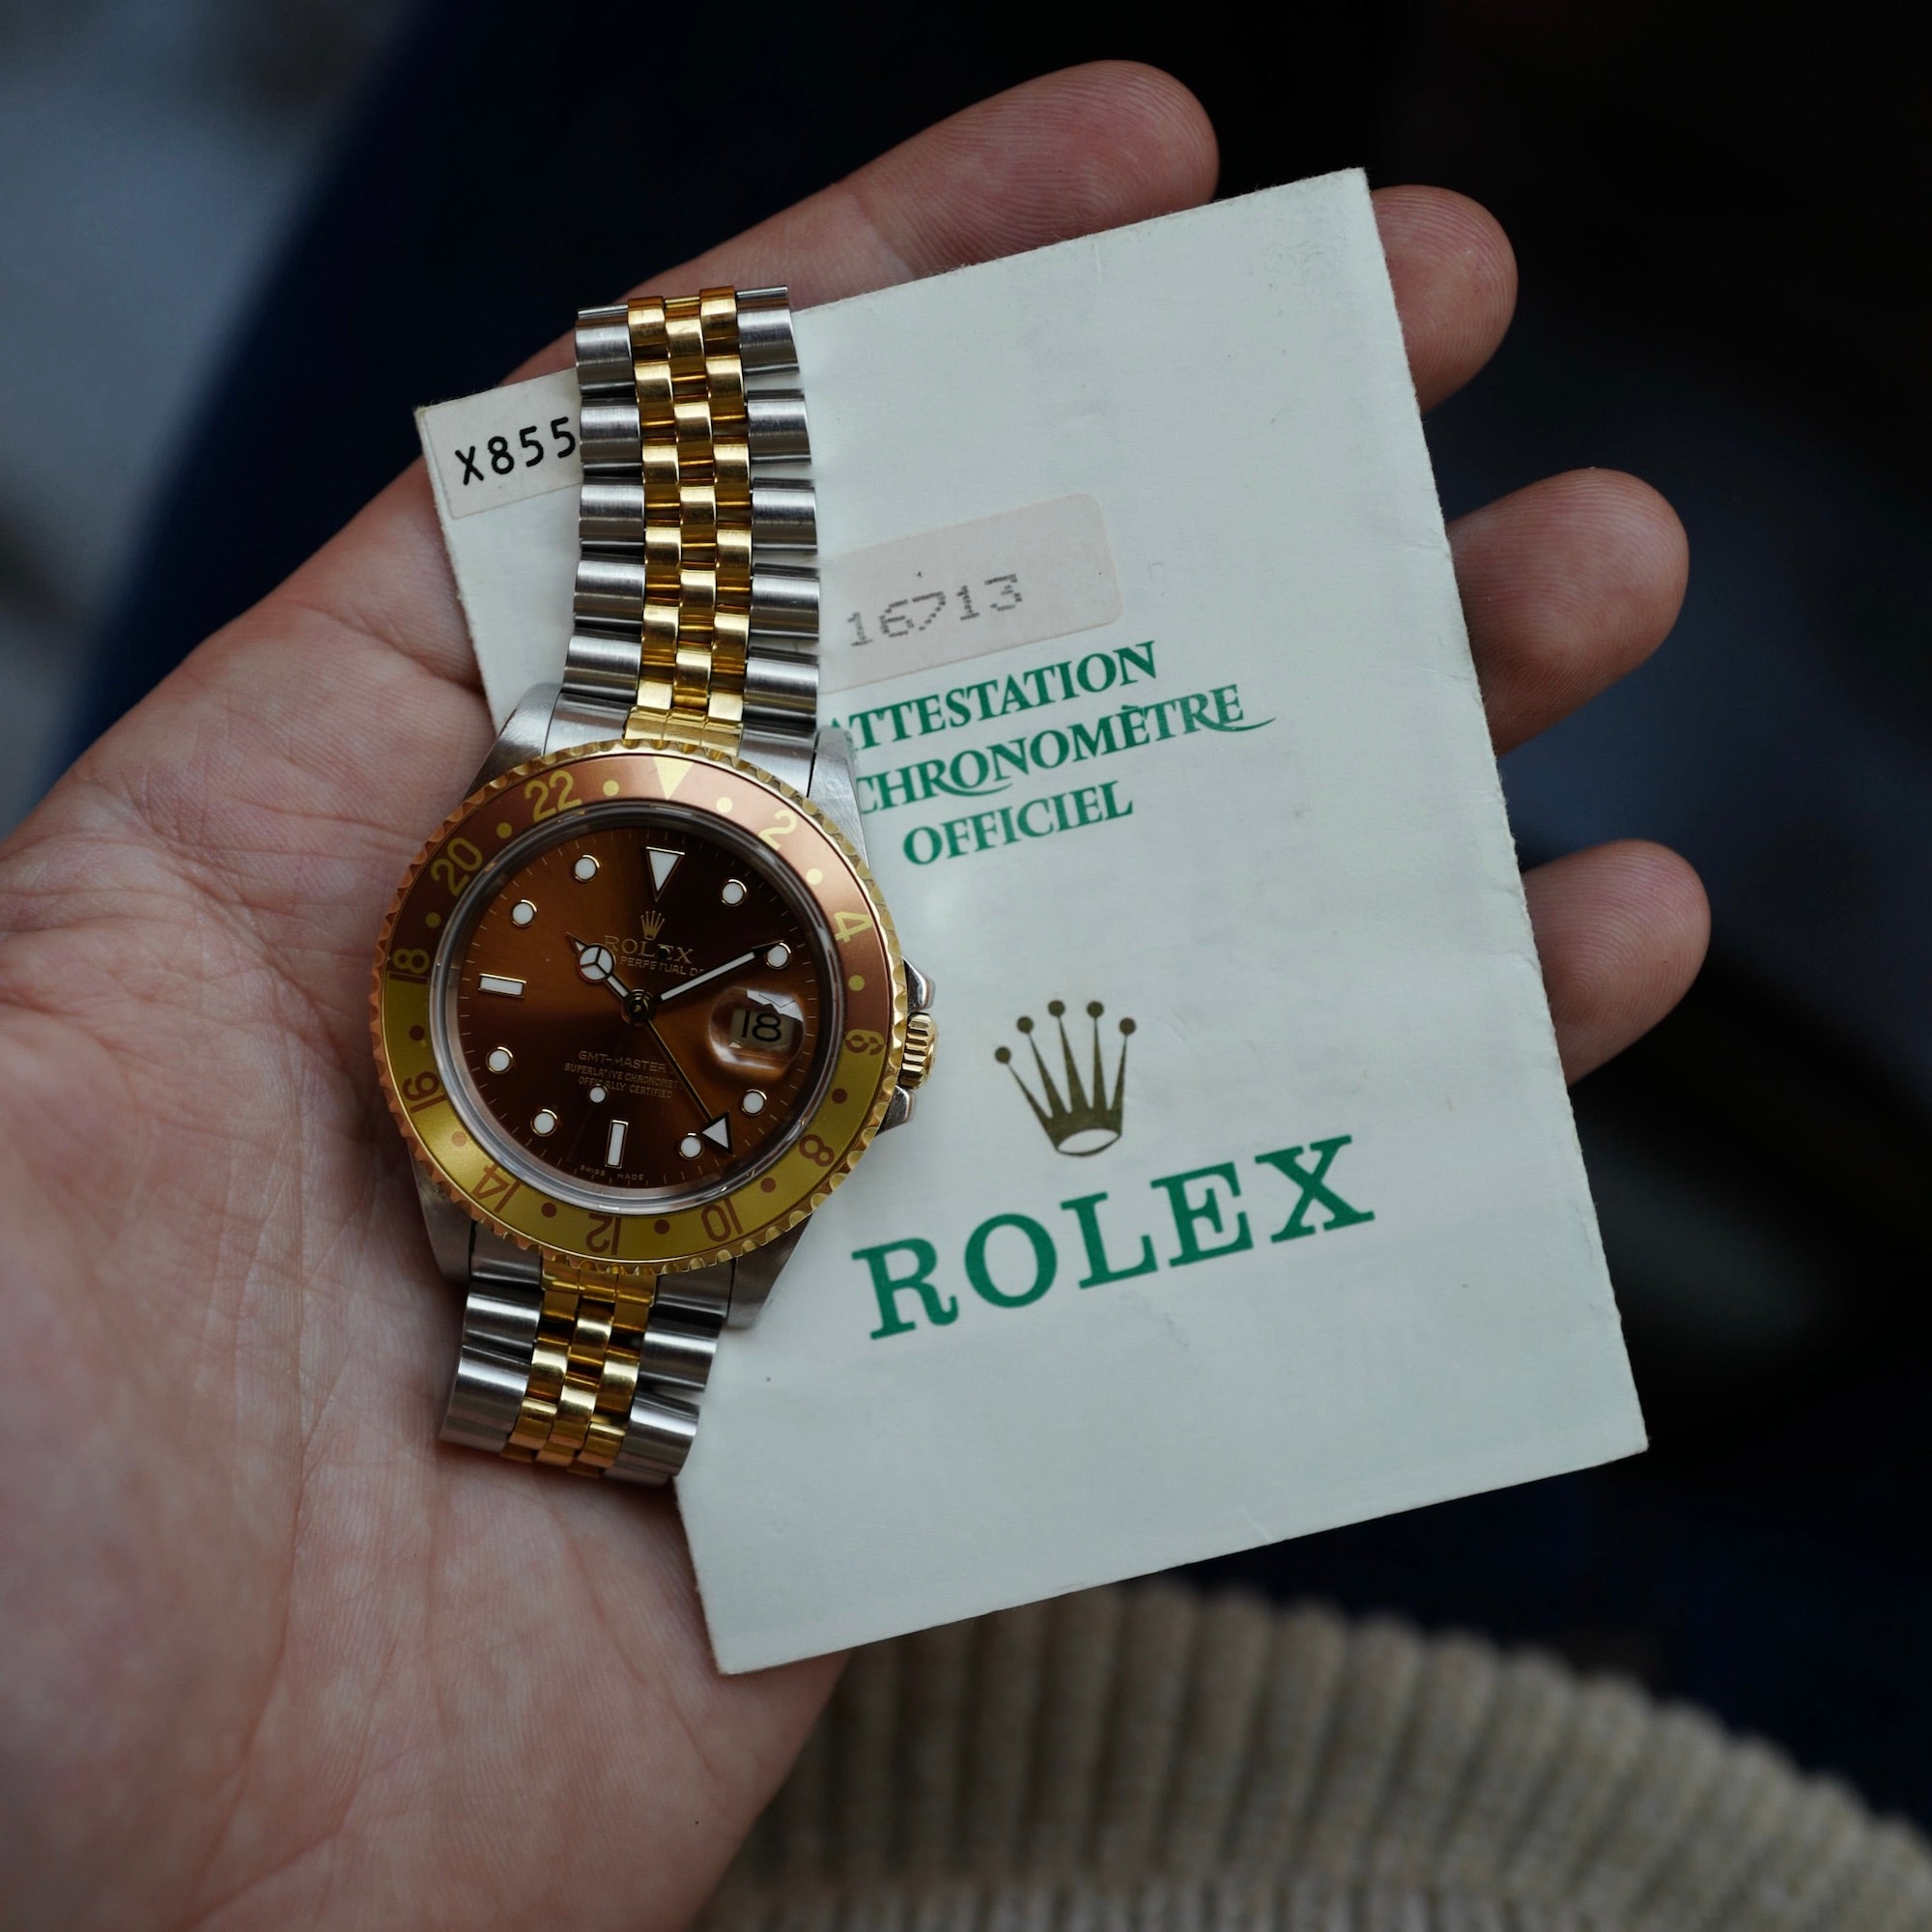 Rolex - Rolex Two-Tone GMT-Master Ref. 16713 - The Keystone Watches